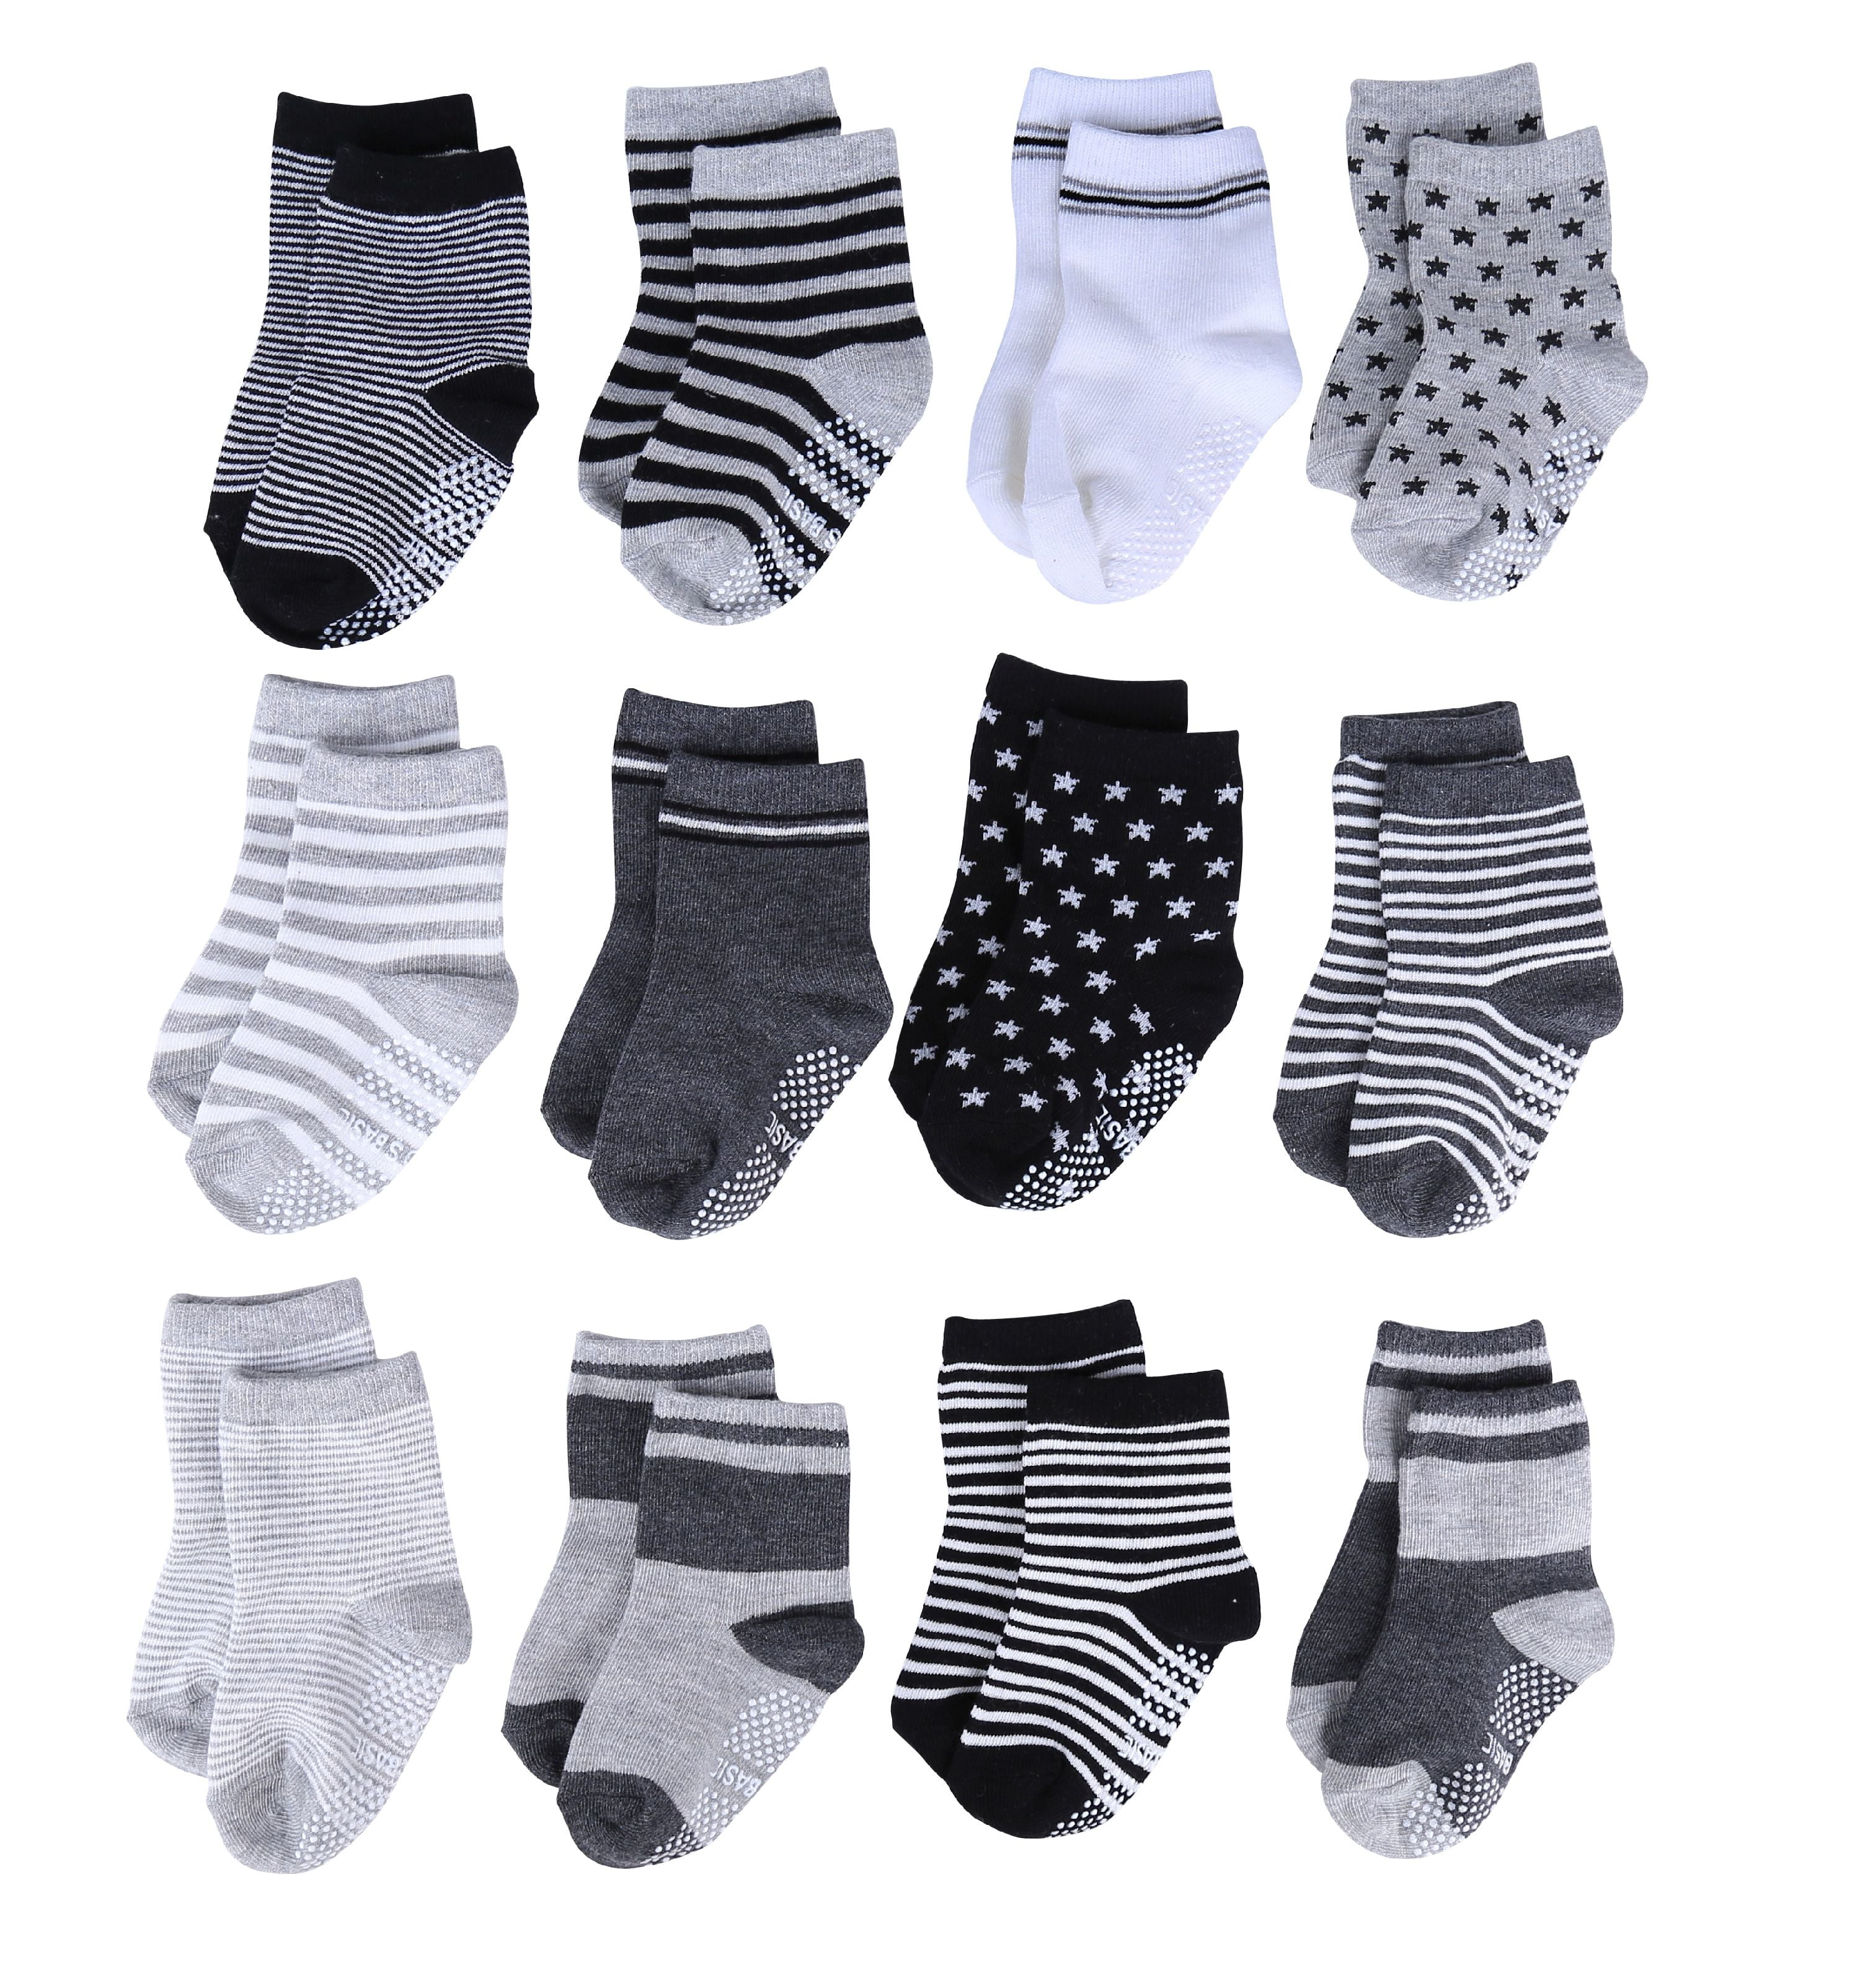 12 Pairs Non Skid Anti Slip Cotton Grip Socks for 8-36 Months Baby Socks 